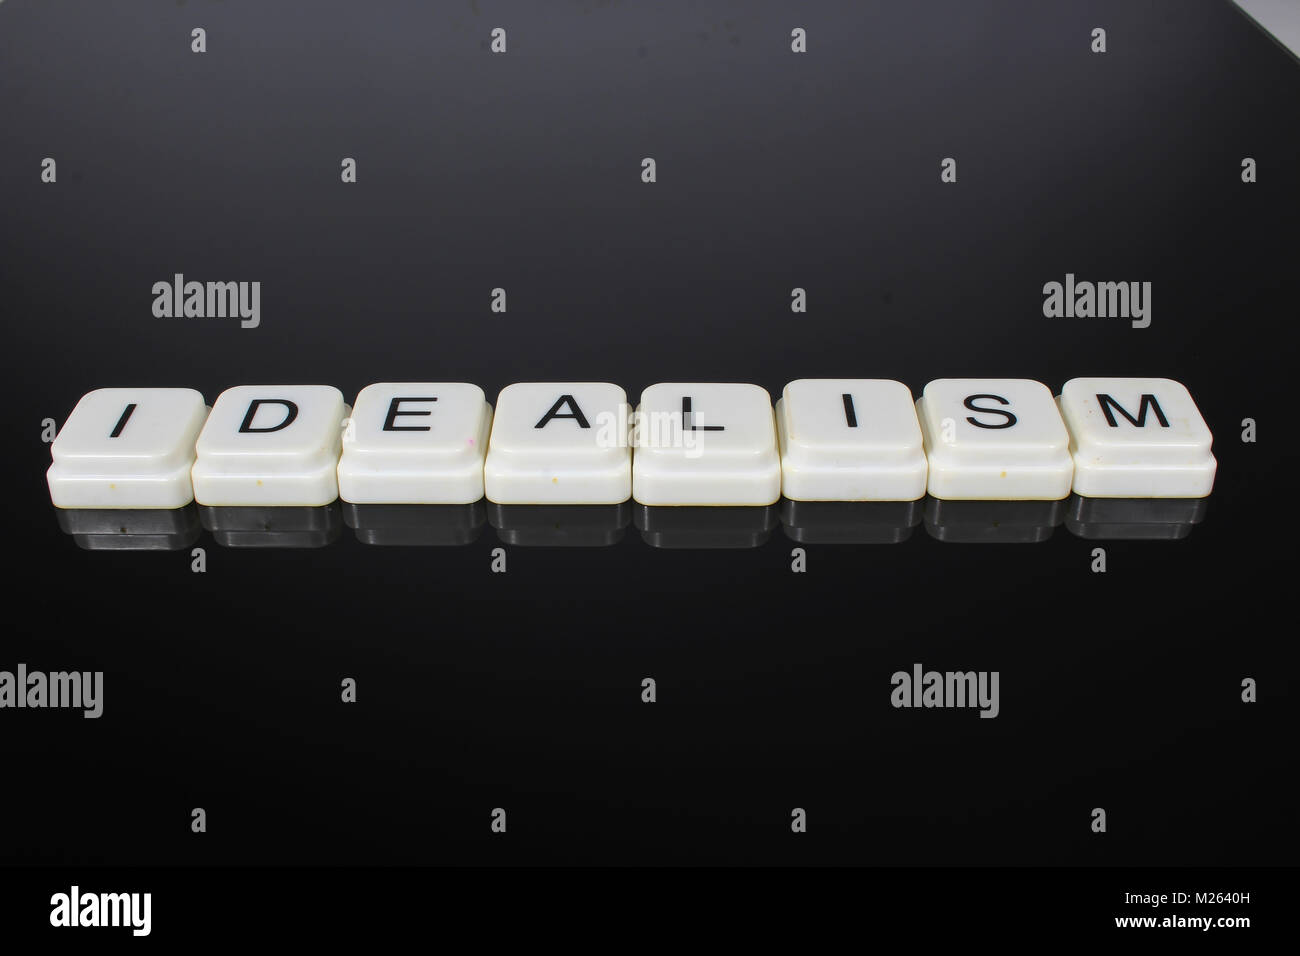 Idealism text word title caption label cover backdrop background. Alphabet letter toy blocks on black reflective background. White alphabetical letter Stock Photo